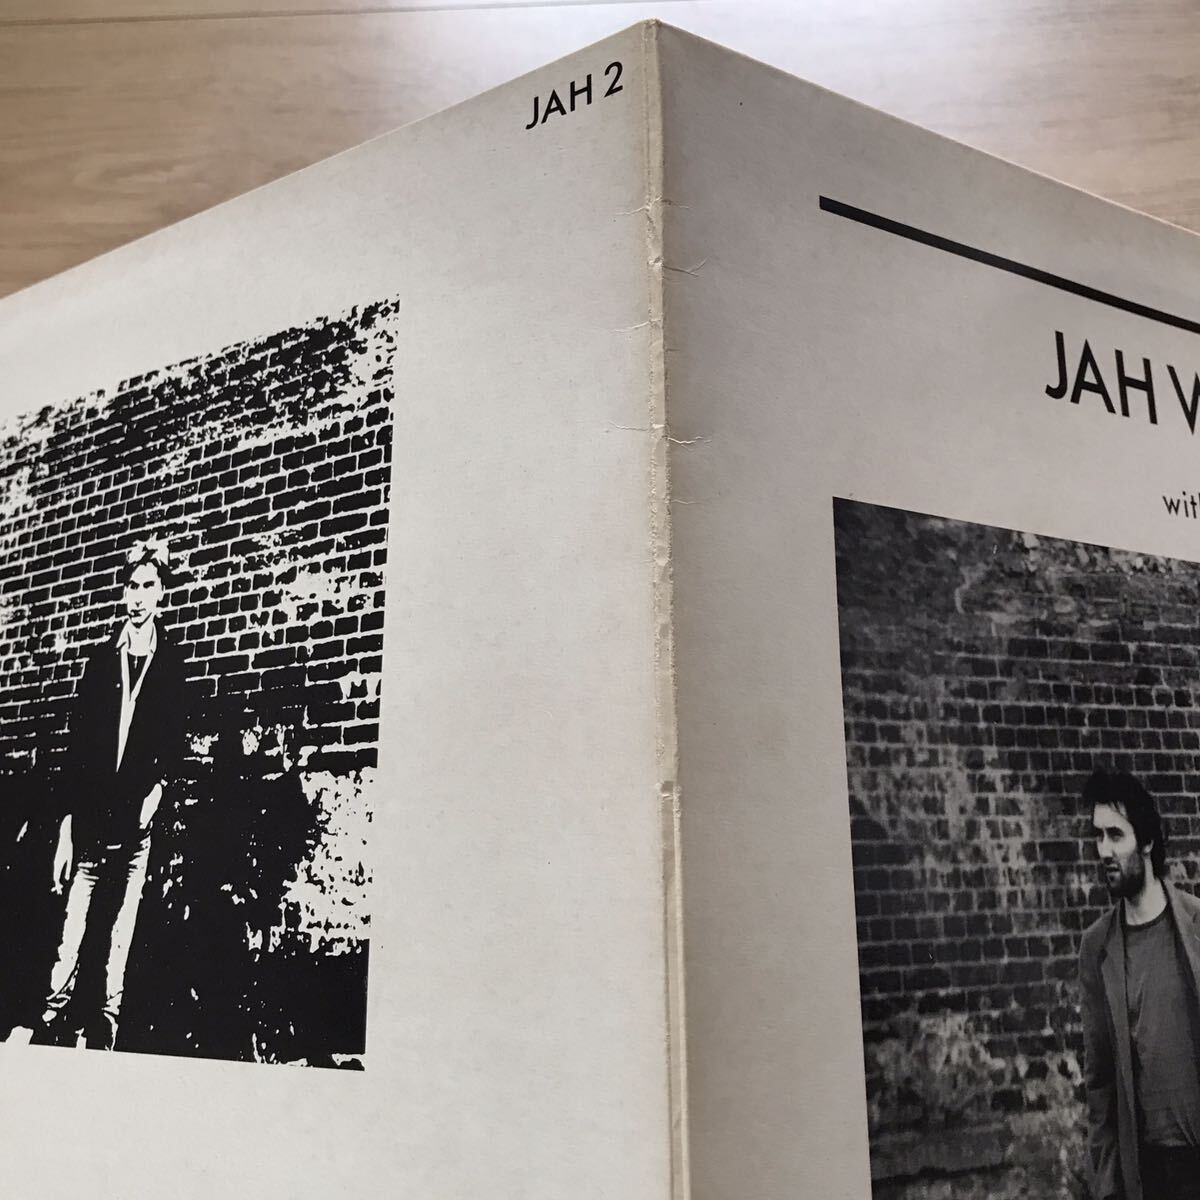 LP UK record Jah Wobble With Animal A Long, Long Way Lago Records JAH 2